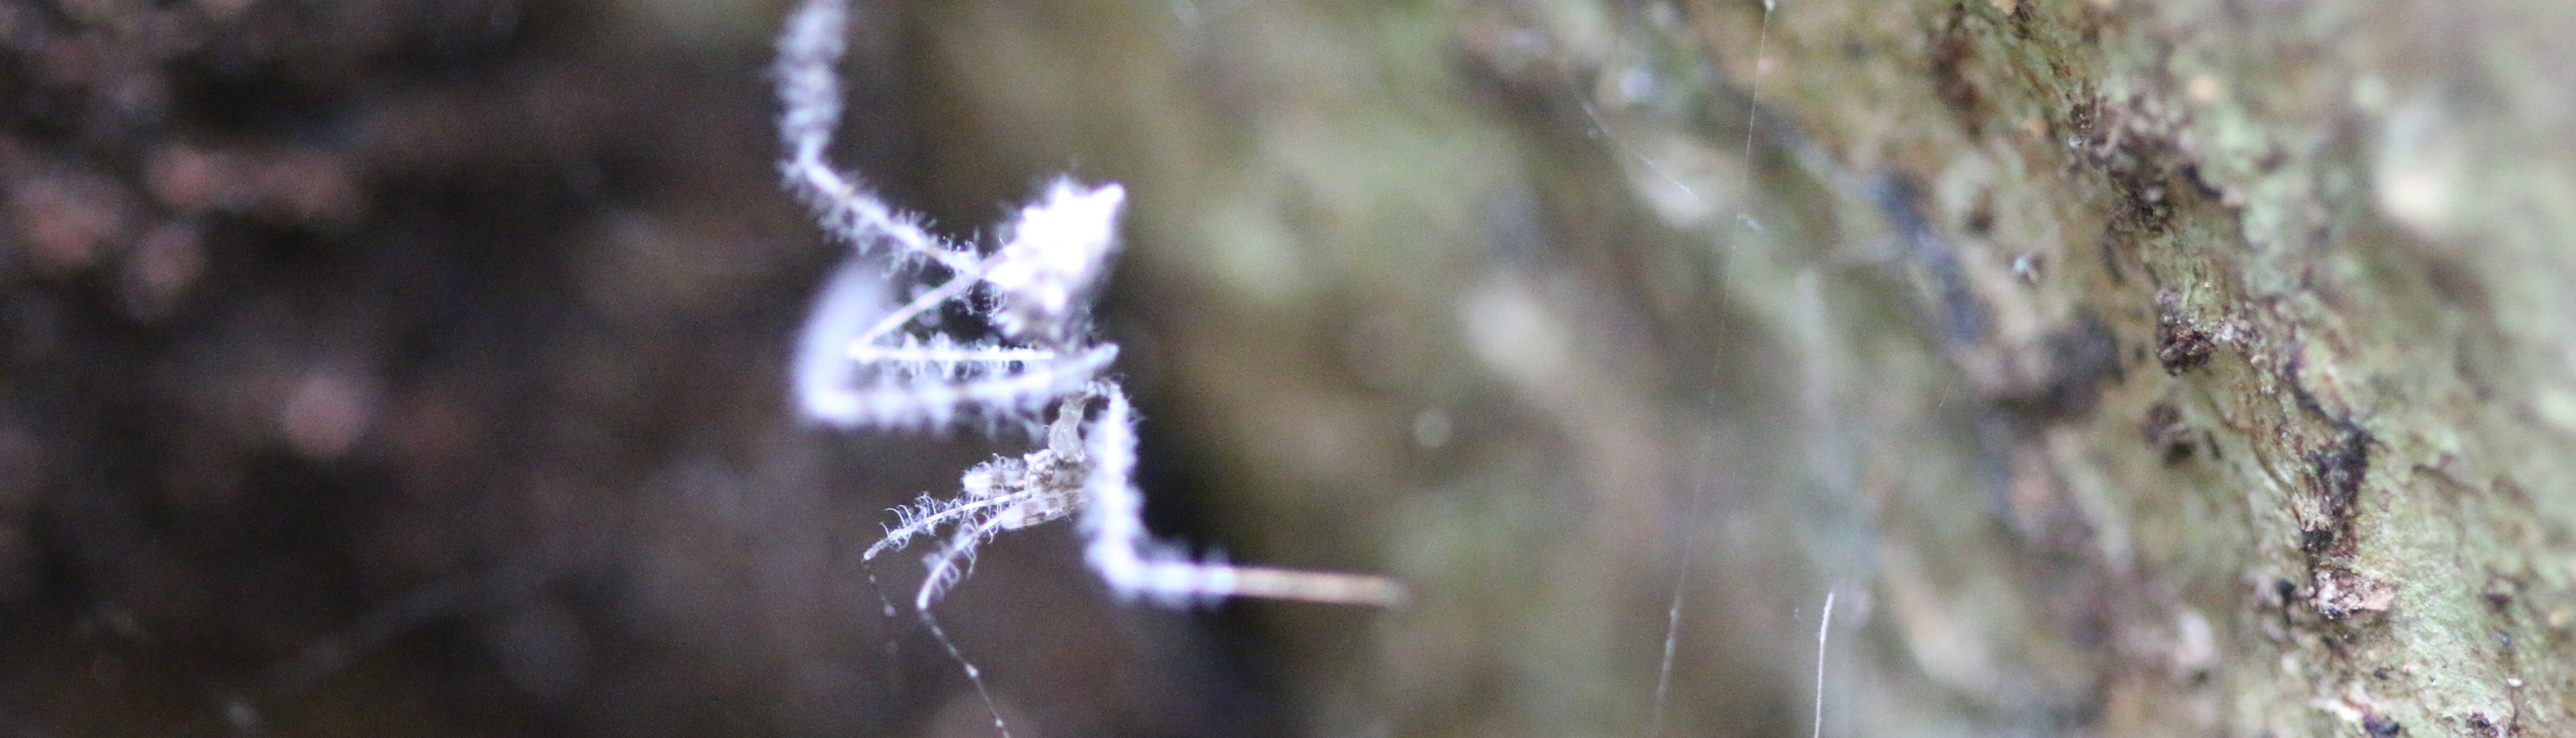 Emesine nymph on spider web